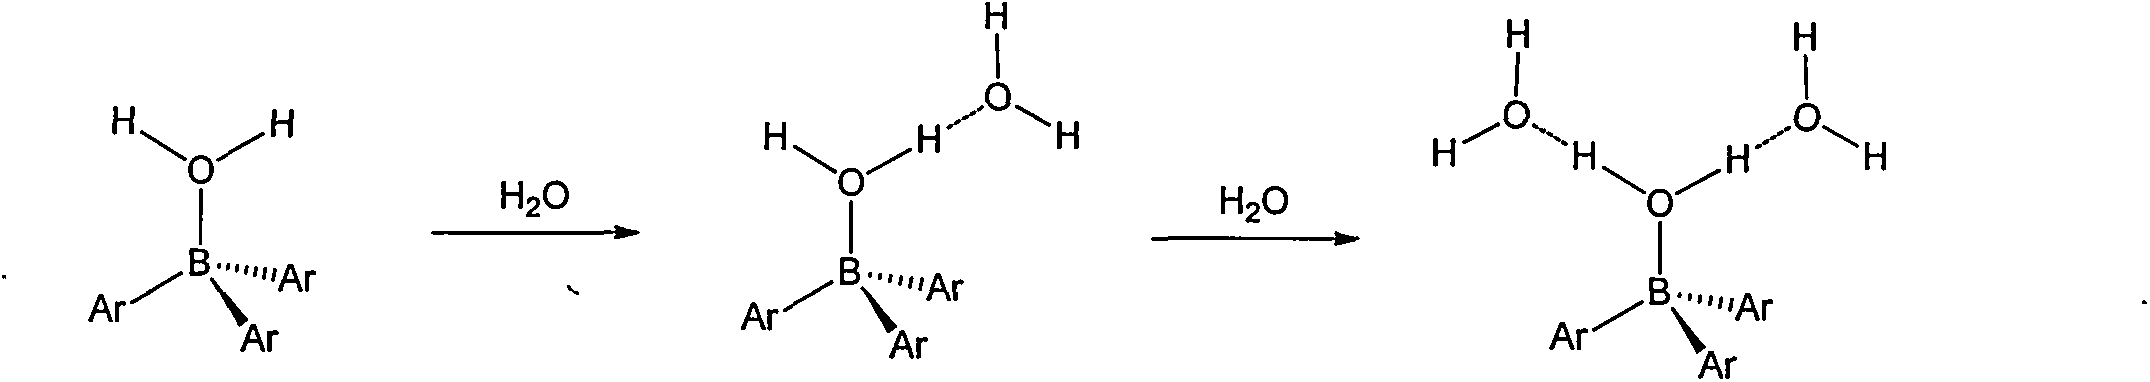 Preparation method of tri(pentafluorophenyl) borane